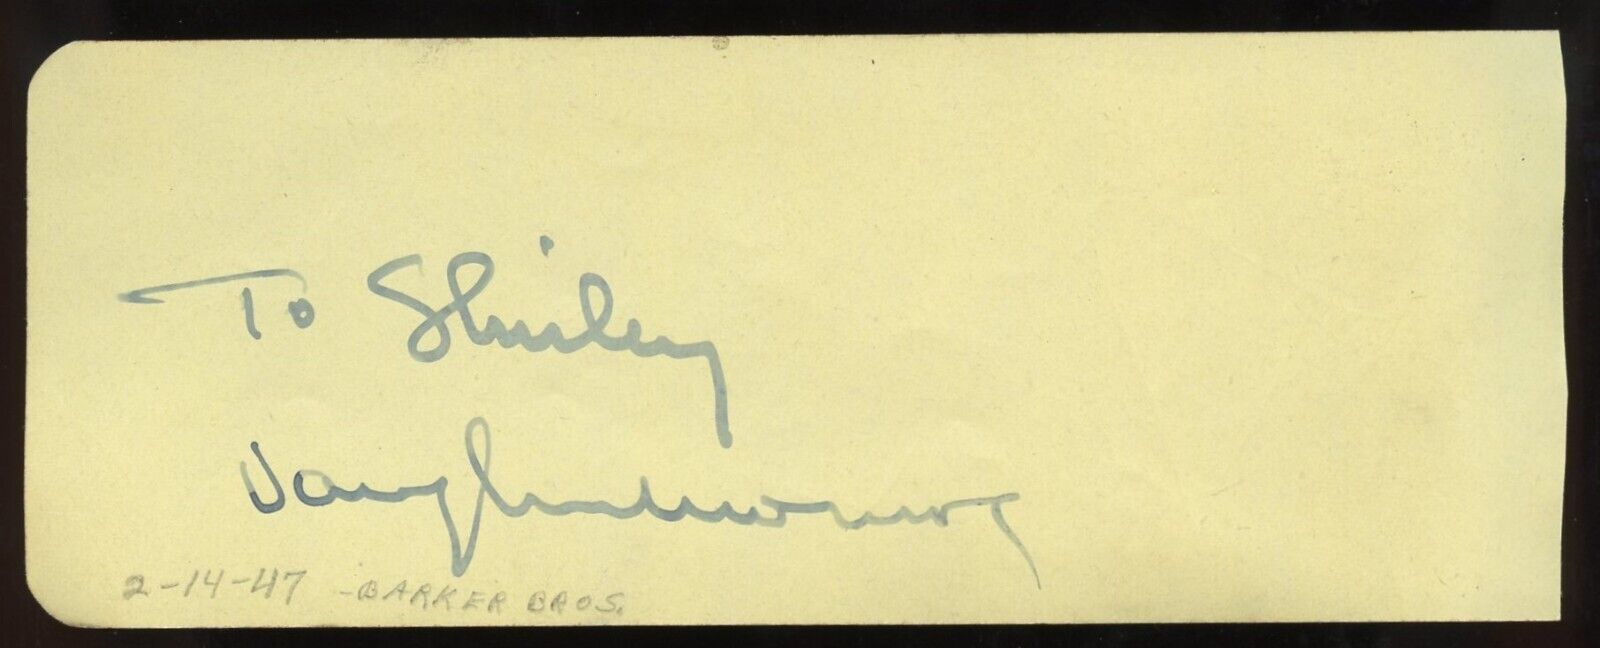 Vaughn Monroe d1973 signed 2x5 autograph on 2-14-47 Barker Bros Decorator Shop